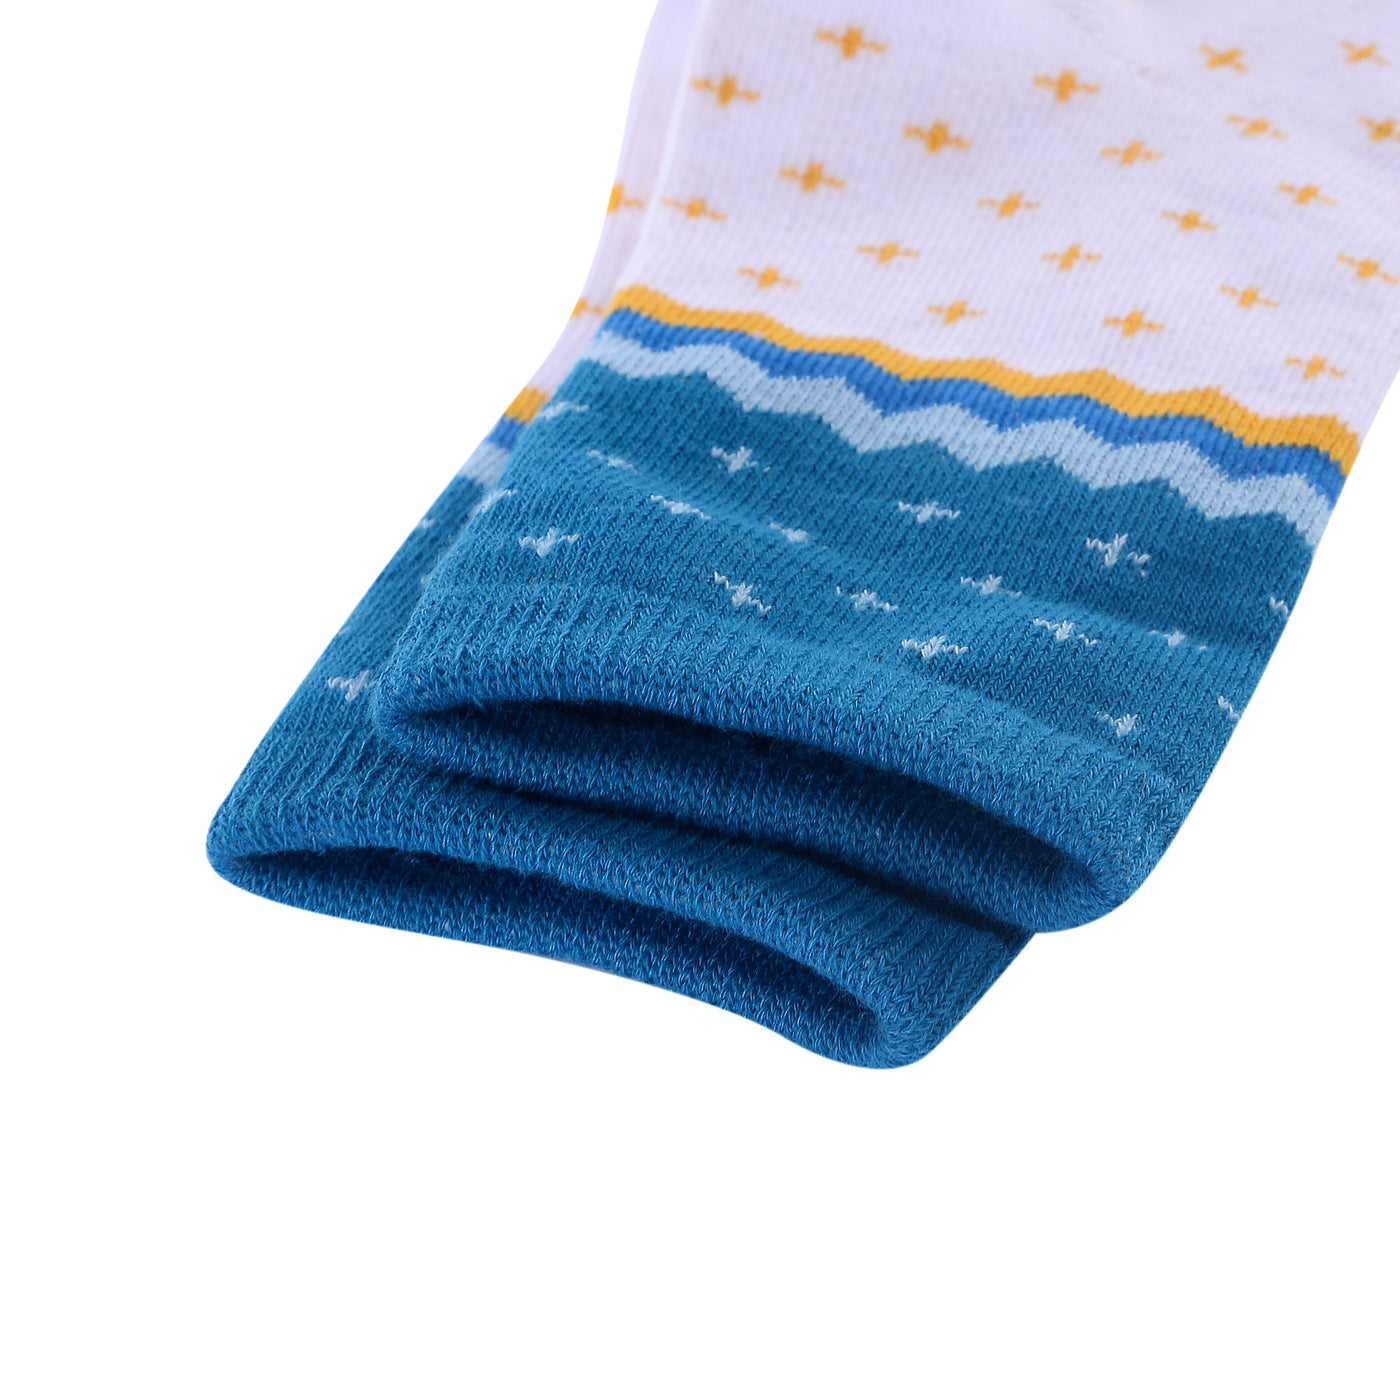 Deep Sea Laulax 6 Pairs Combed Cotton Girl's Socks Size UK 9-11.5/Europe 27-30 Gift Set